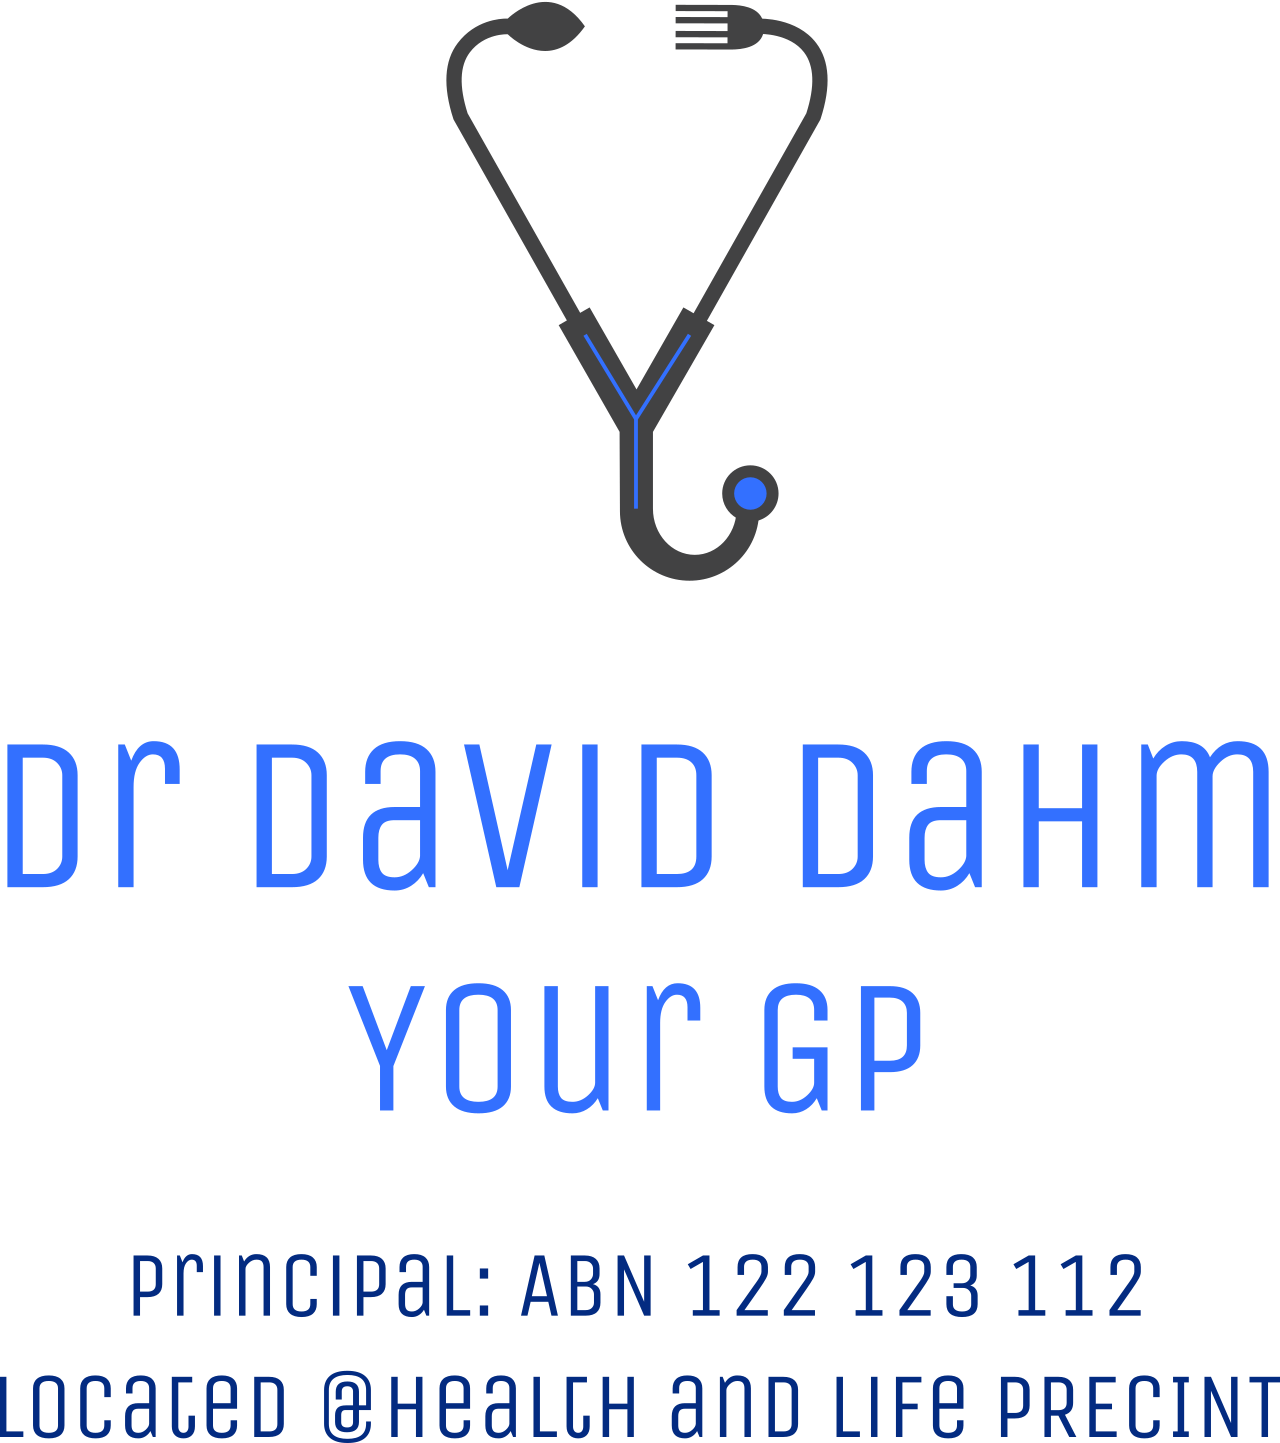 Dr David Dahm GP 's web page